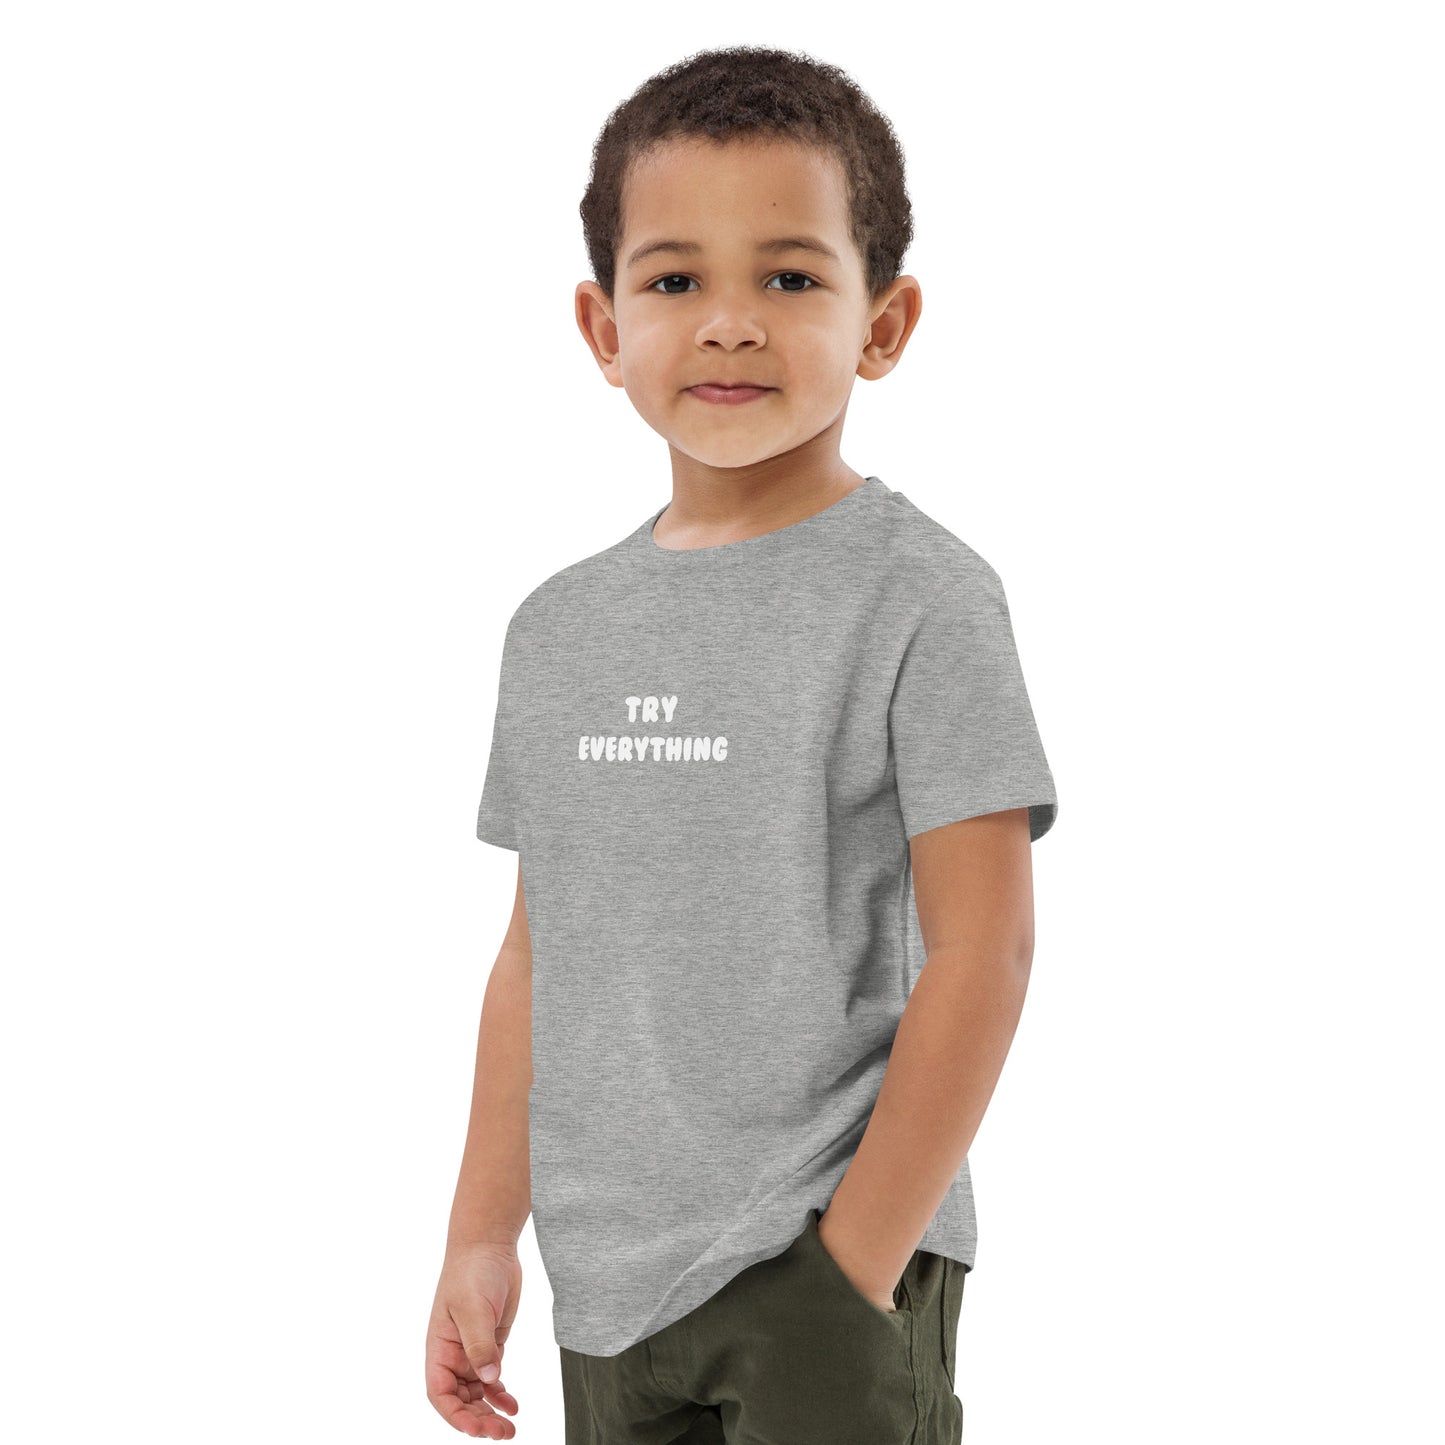 Try Everything Kids 100% Organic Cotton T-Shirt